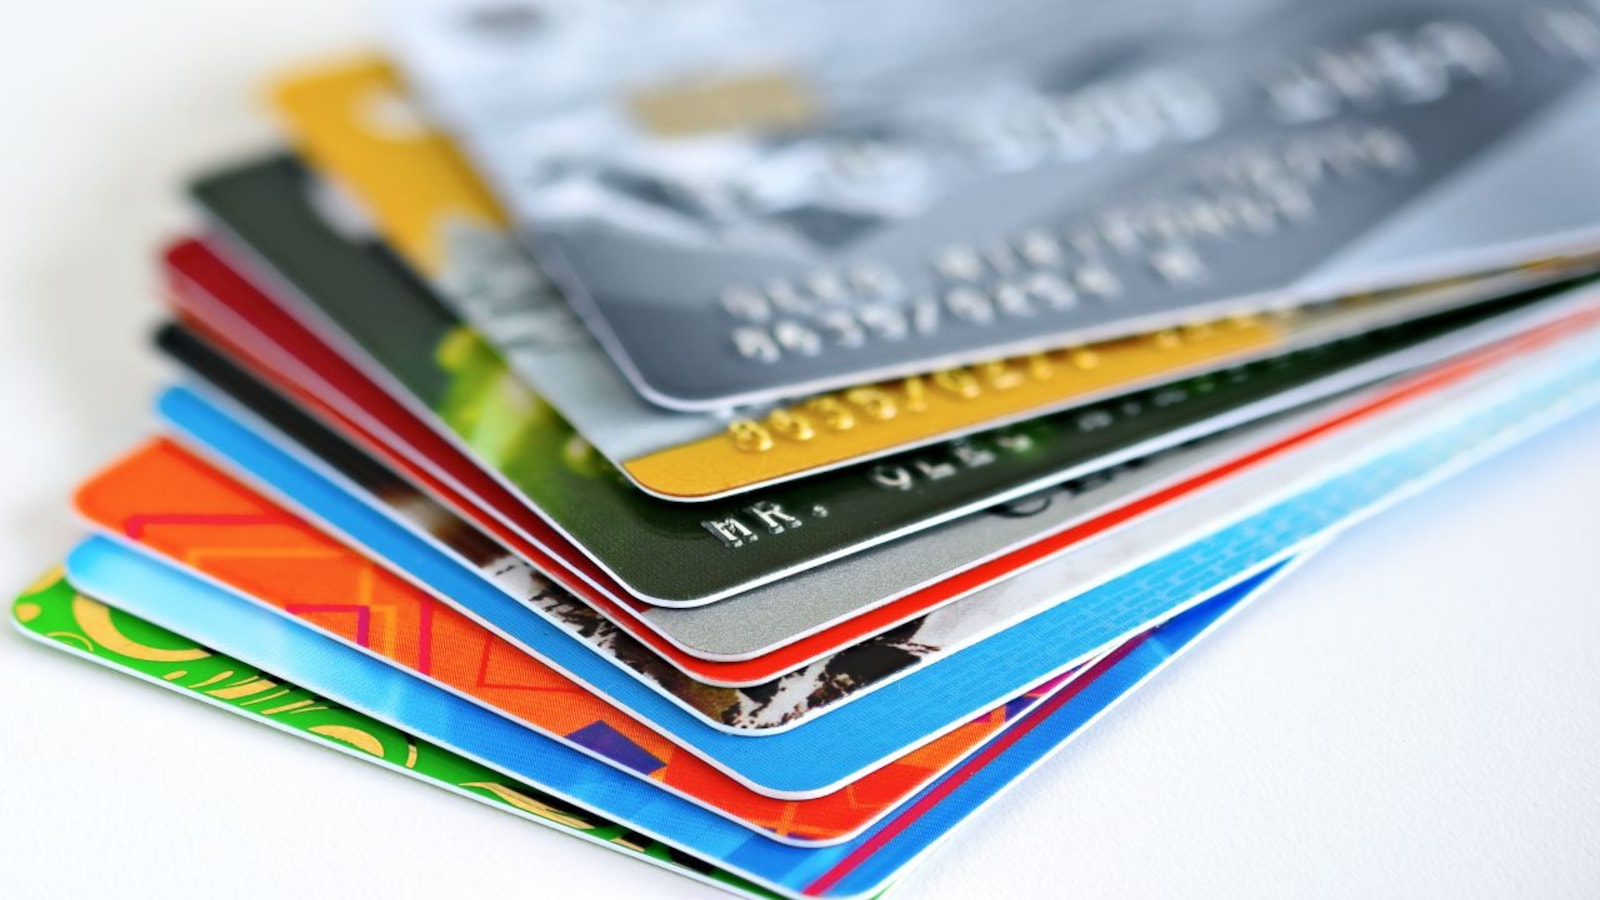 Banks step up credit card play ahead of festive season